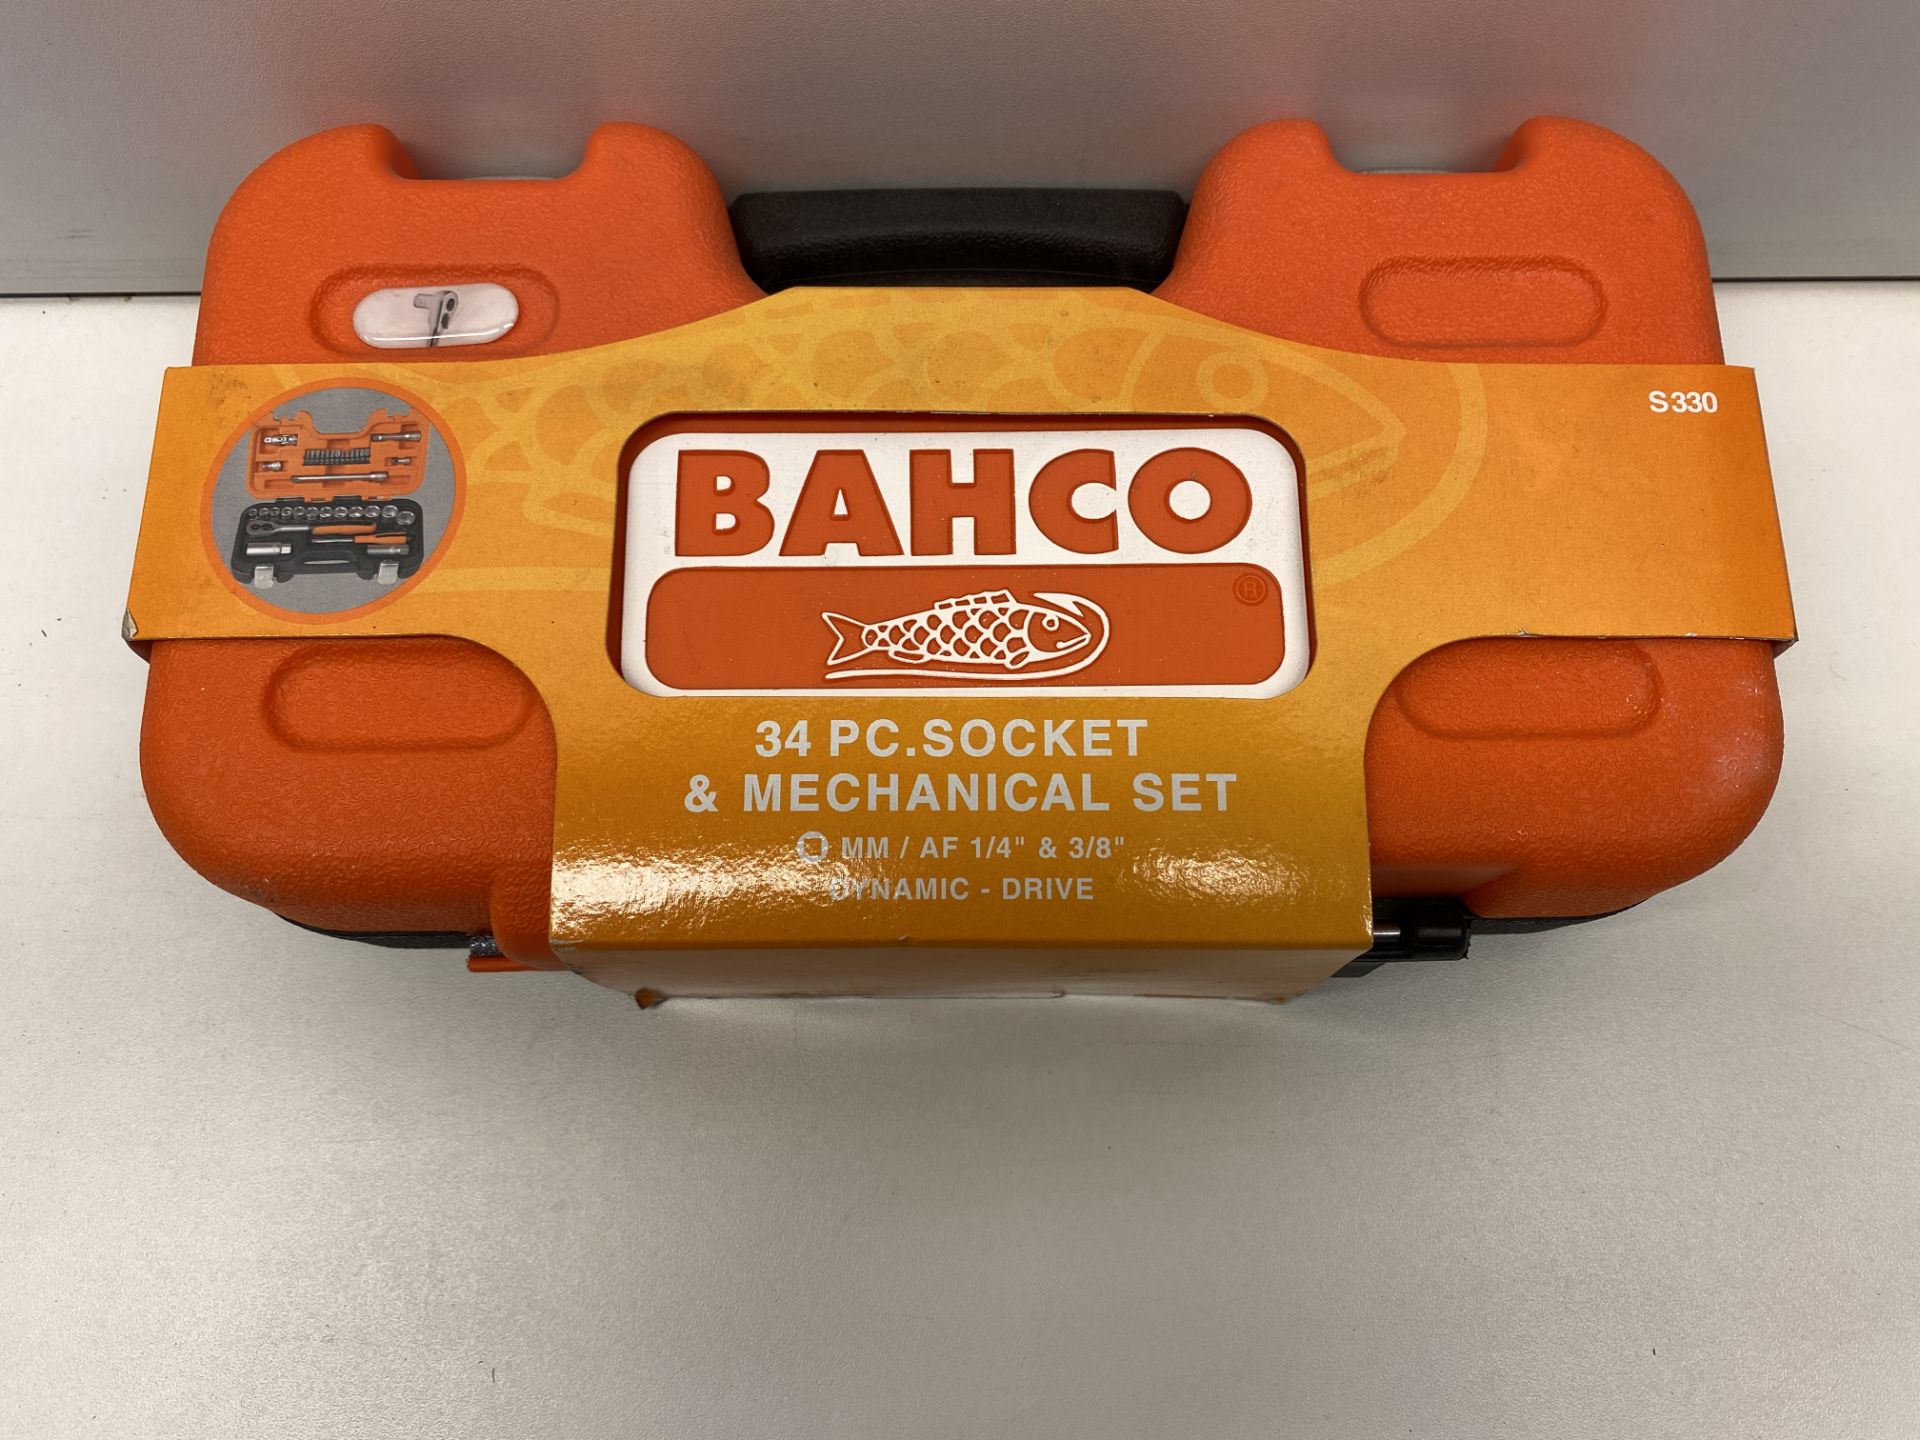 Bahco S330 34 Piece Socket & Mechanical Set | RRP £32.99